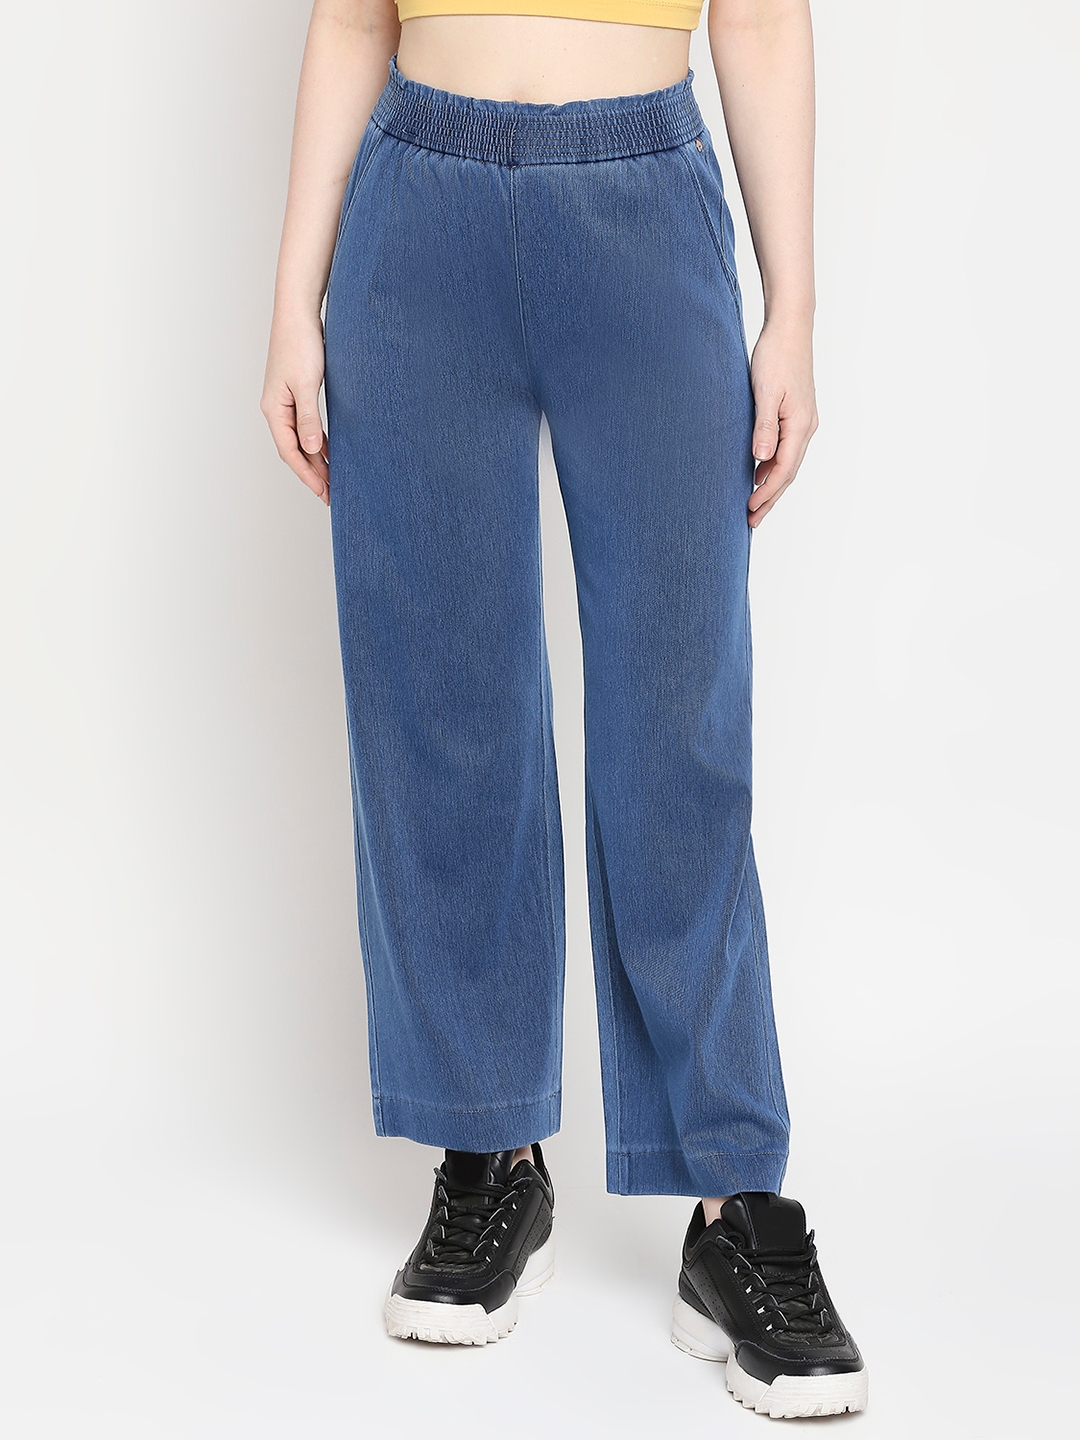 spykar | Women's Blue Cotton Solid Trackpants 0